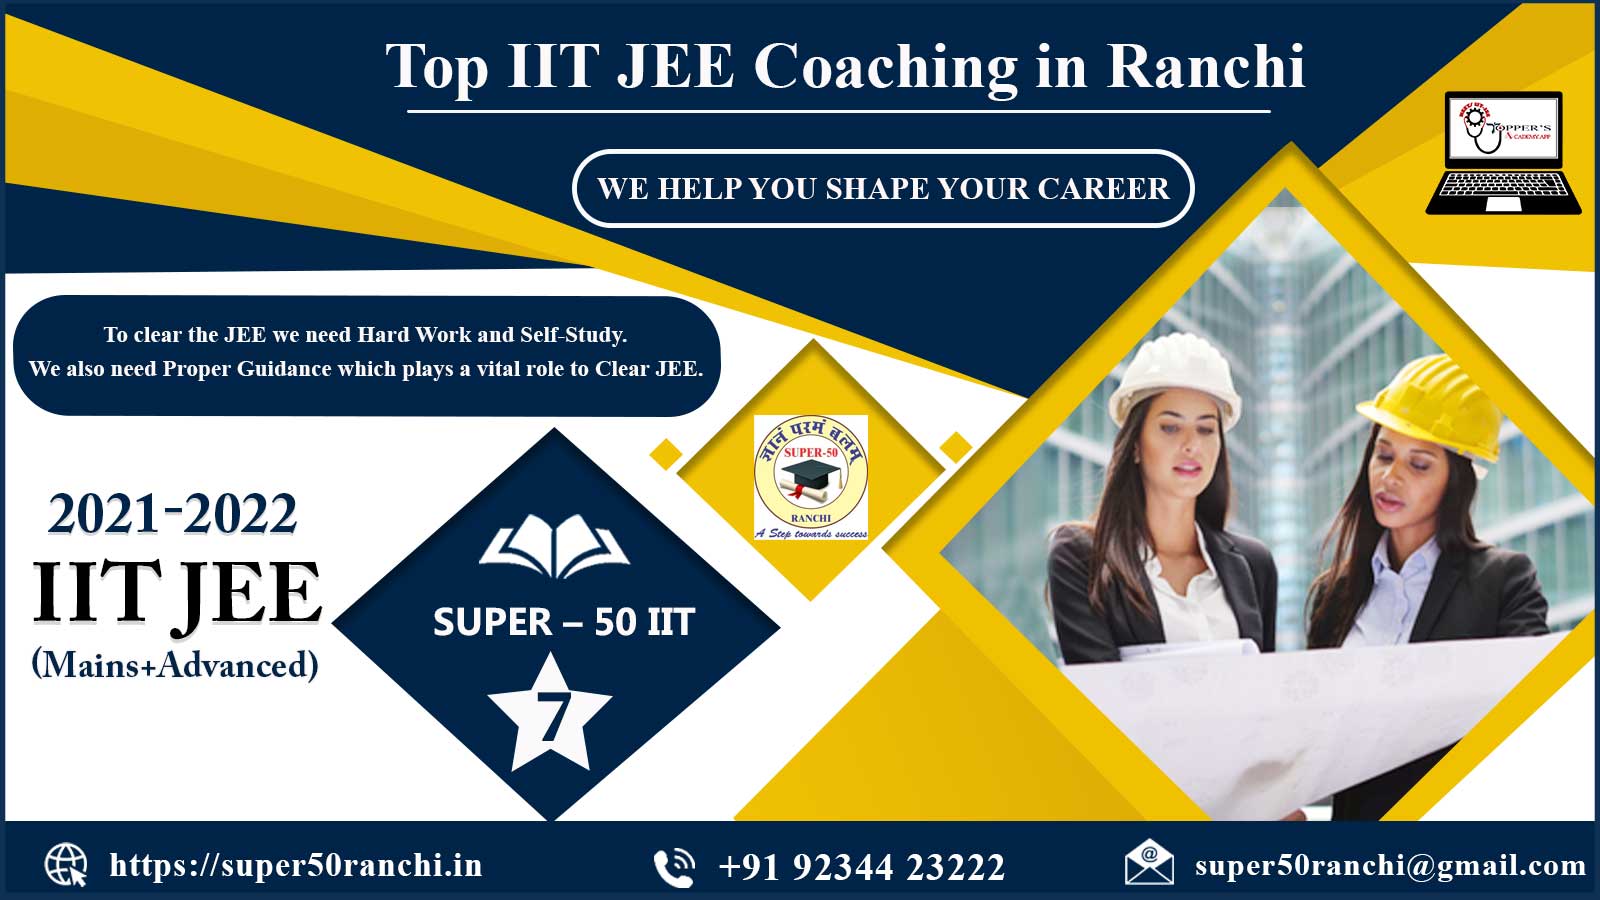 Super – 50 IIT JEE Coaching in Ranchi